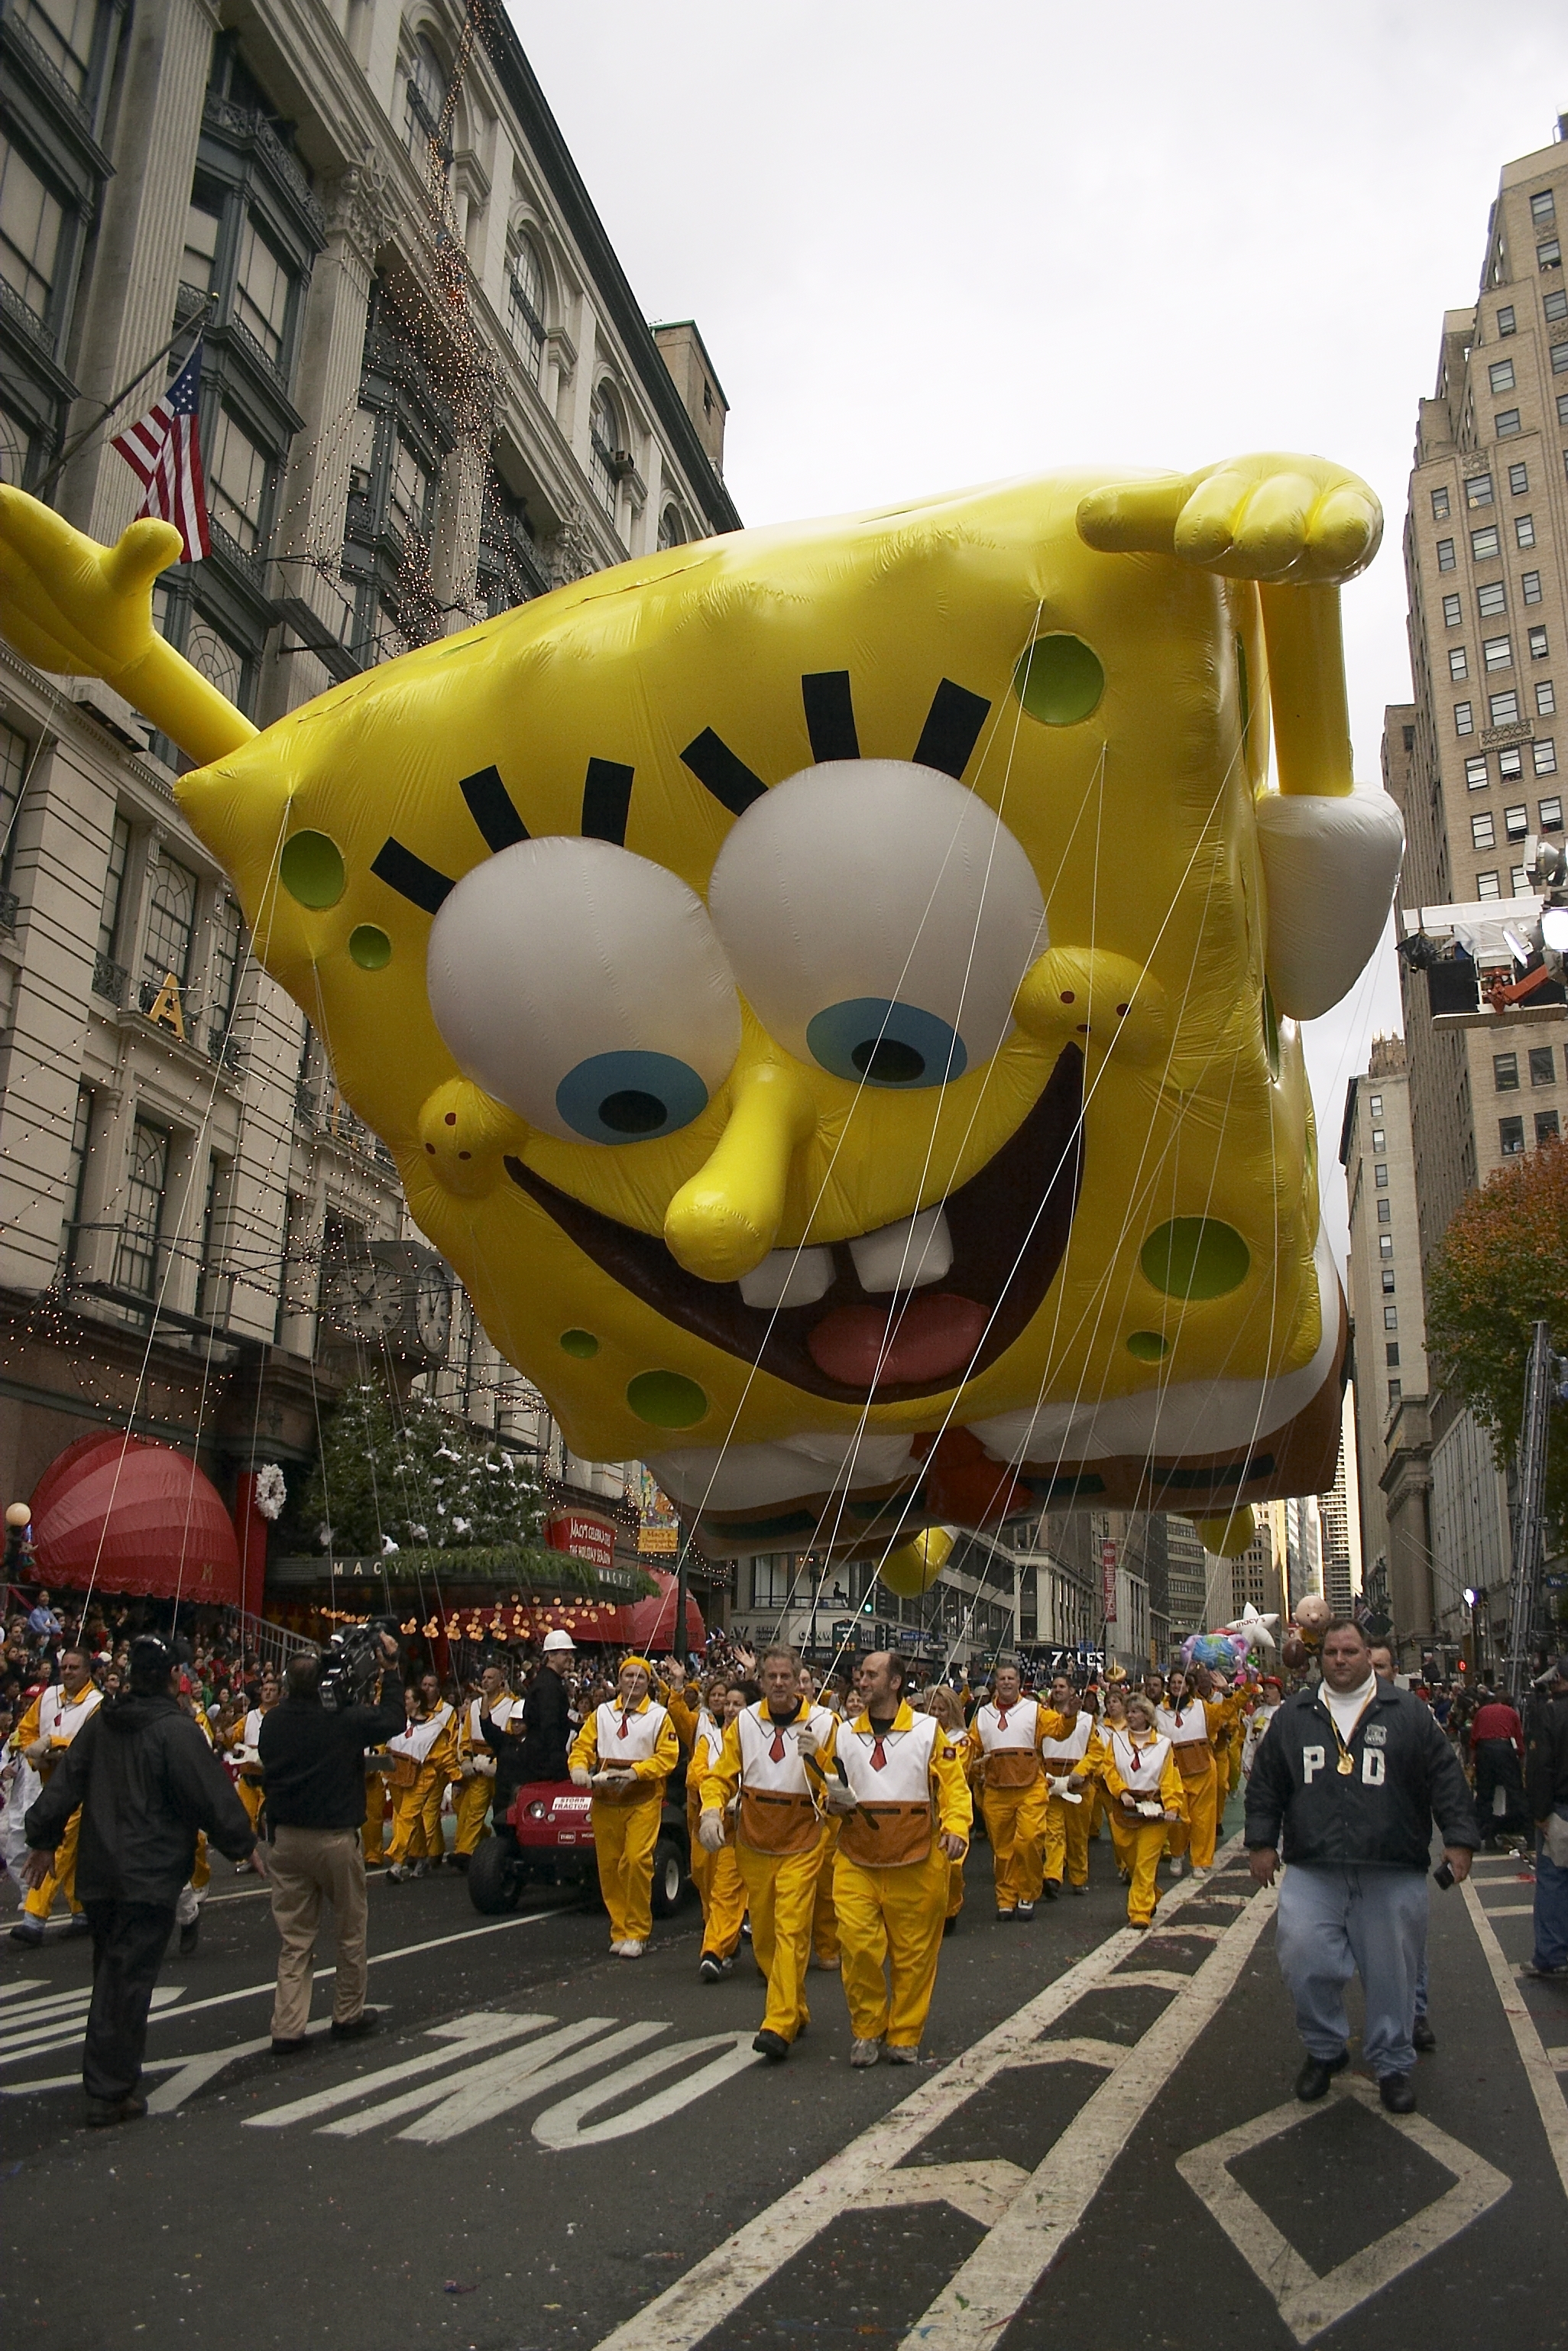 spongebob-squarepants-macys-parades-first-square-shaped-balloon.jpg 